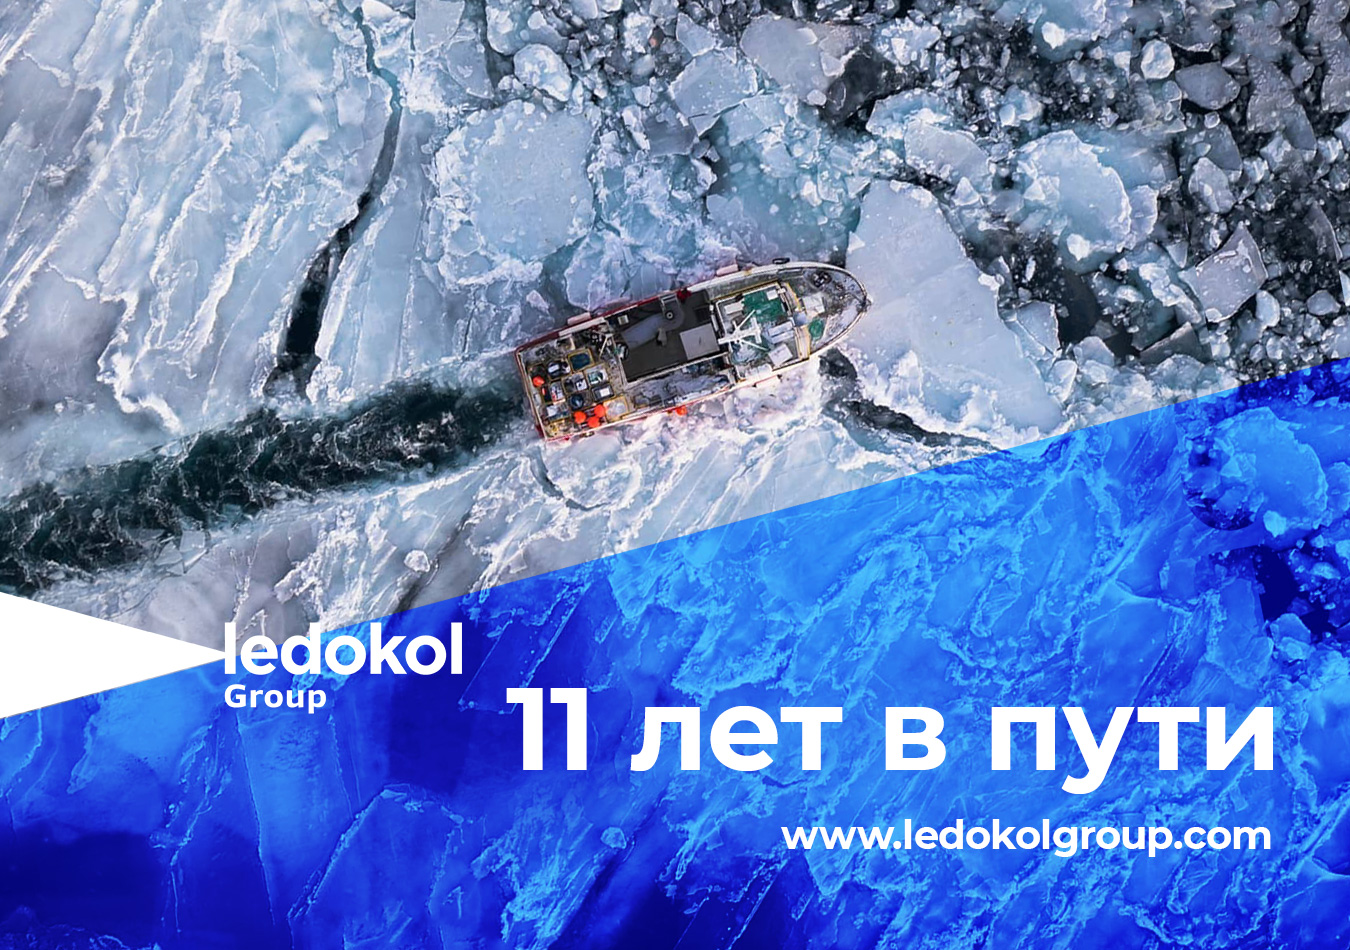 Рекламному холдингу Ledokol Group исполняется 11 лет 